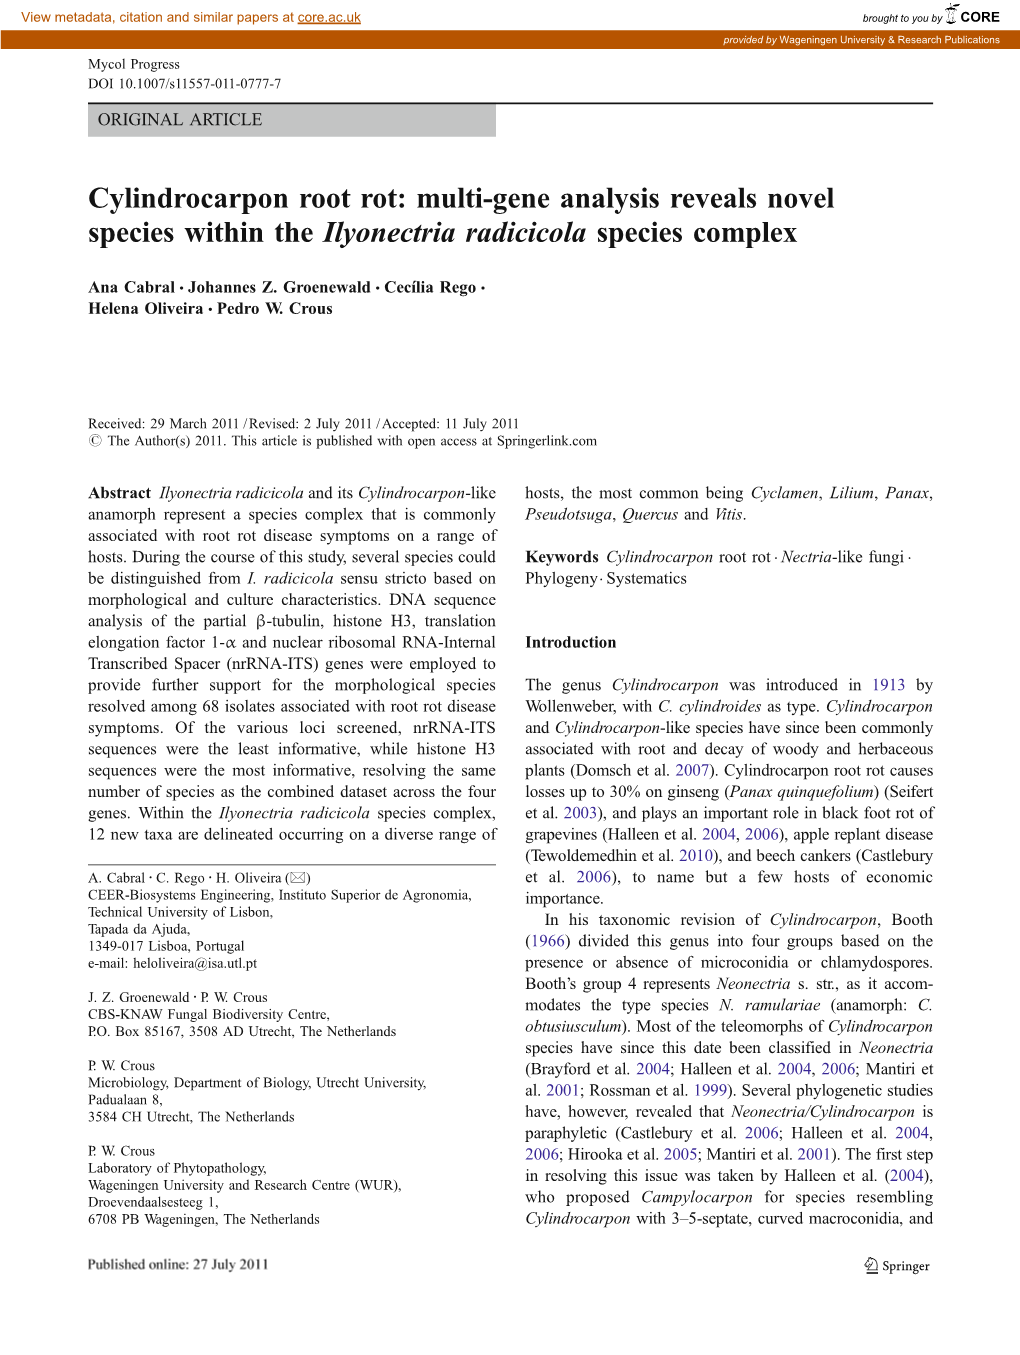 Cylindrocarpon Root Rot: Multi-Gene Analysis Reveals Novel Species Within the Ilyonectria Radicicola Species Complex